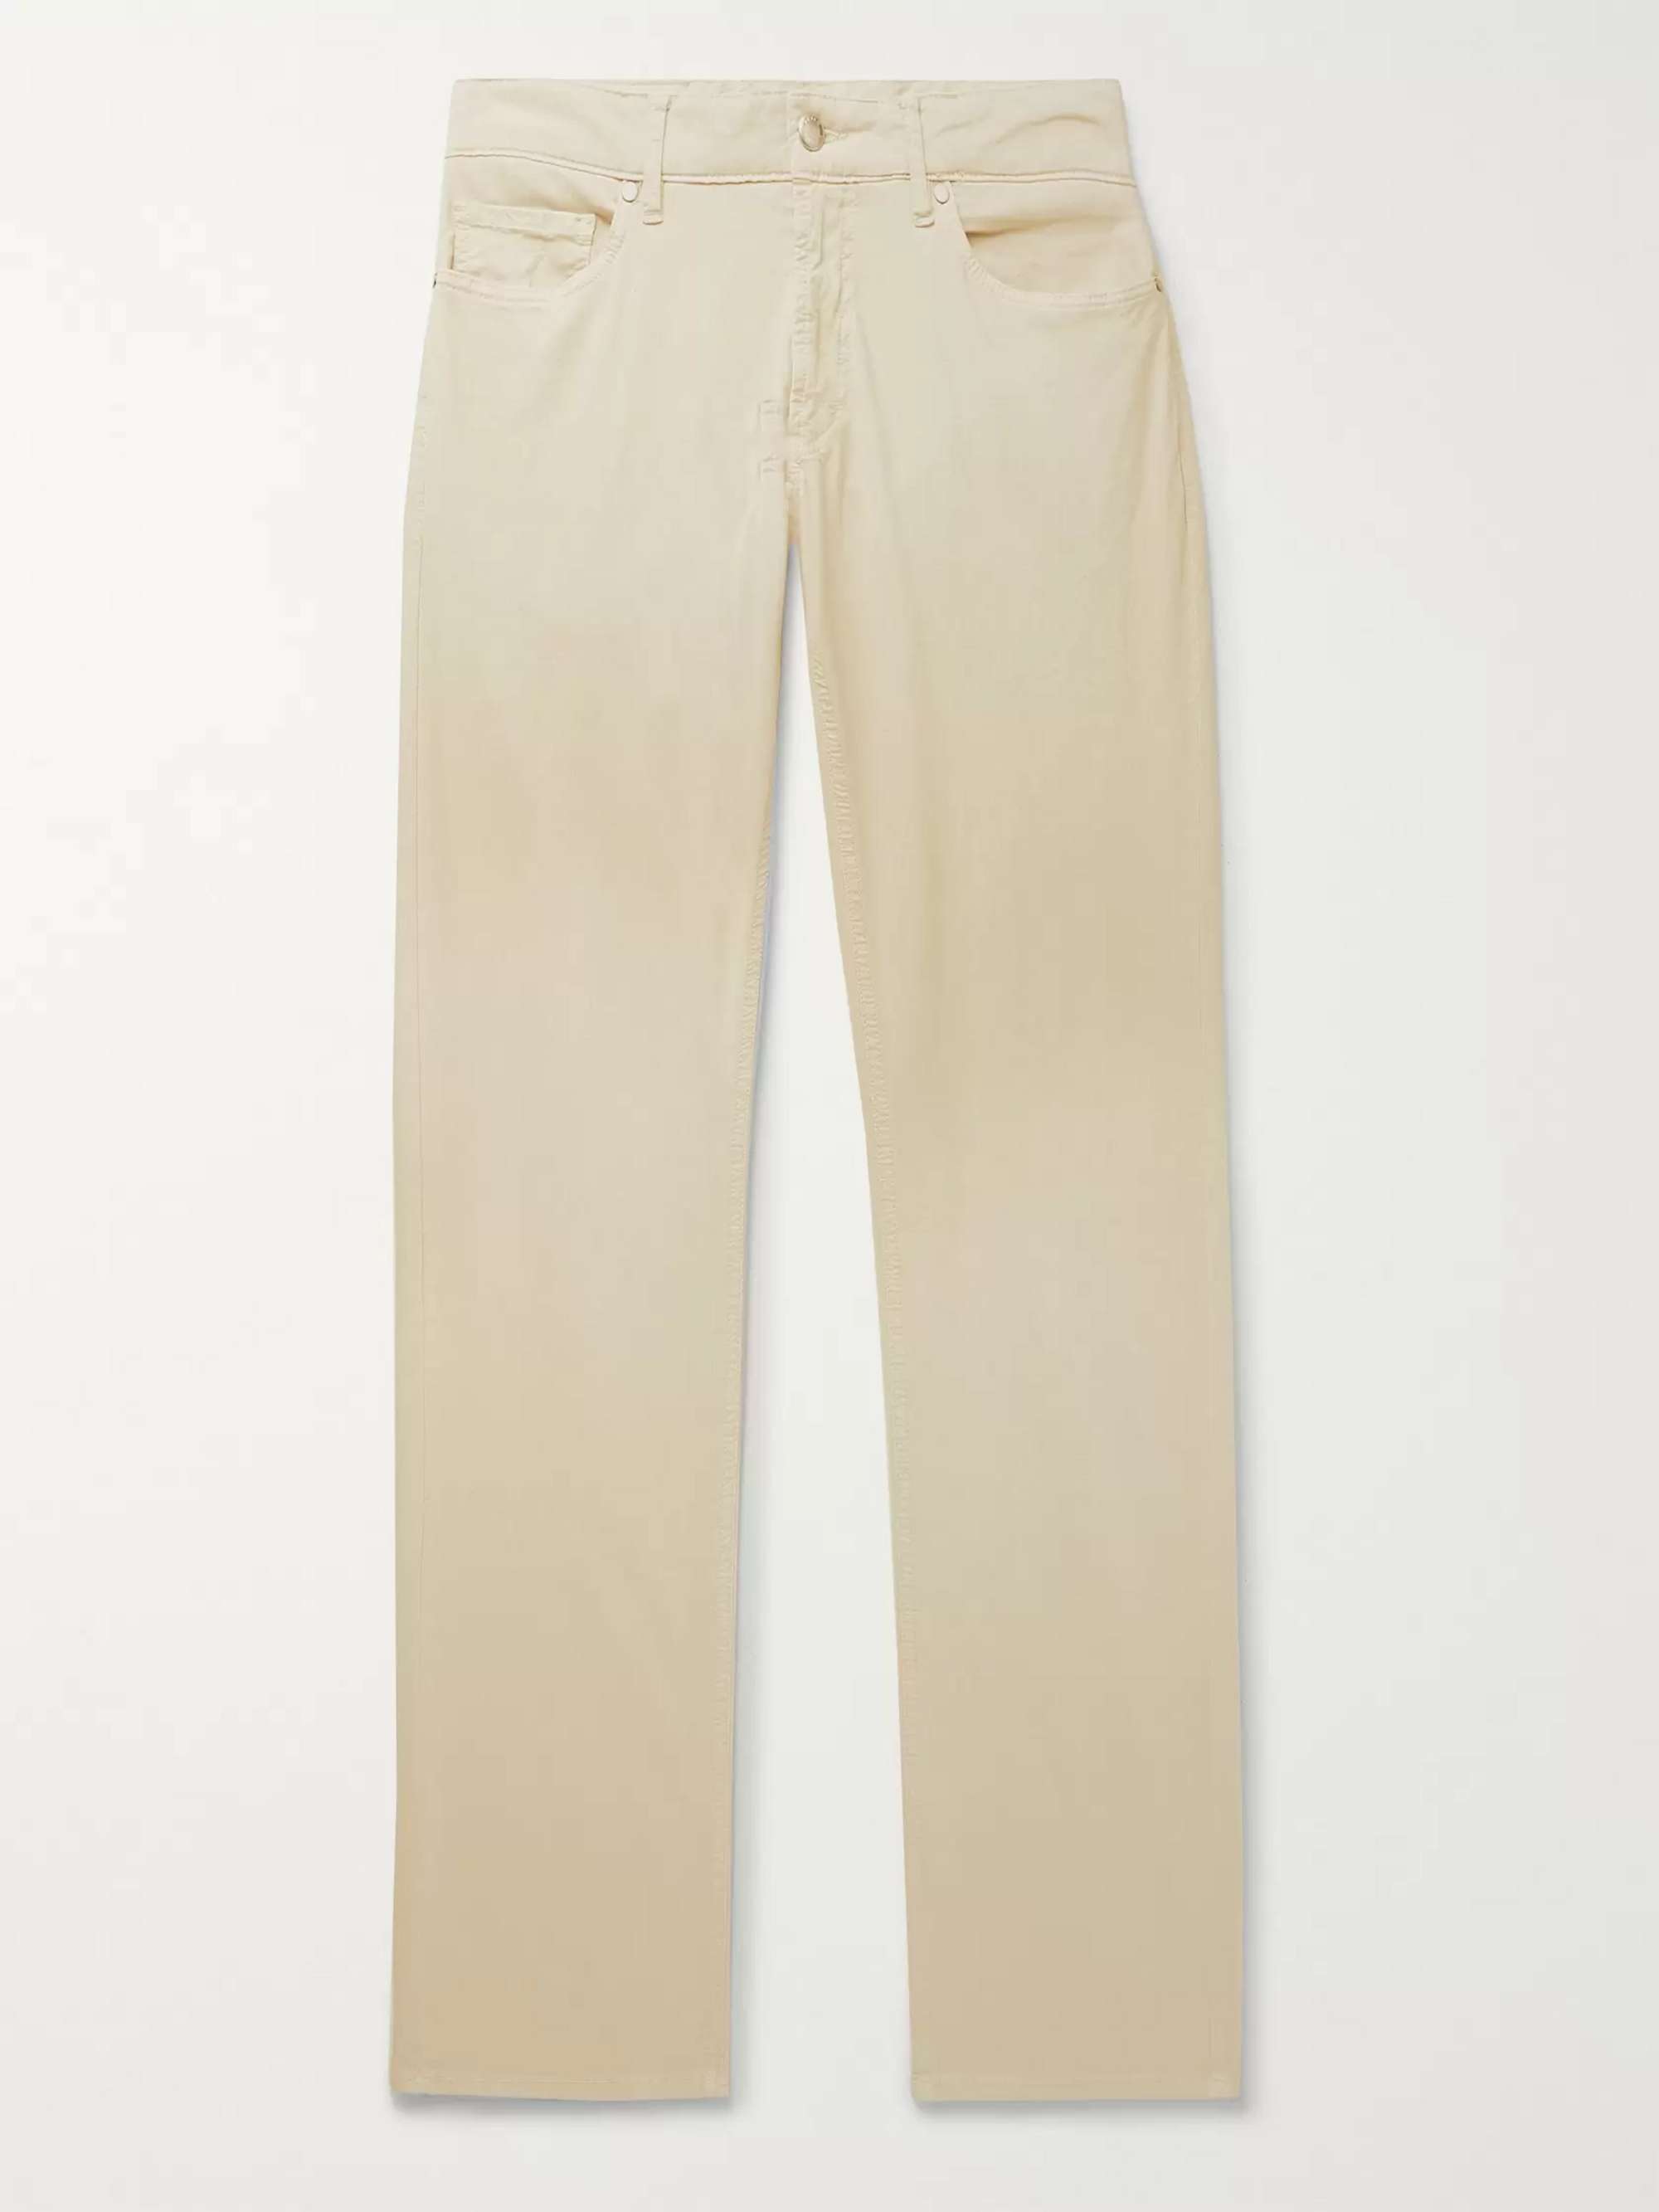 PETER MILLAR Wayfare Slim-Fit Tencel and Cotton-Blend Twill Trousers